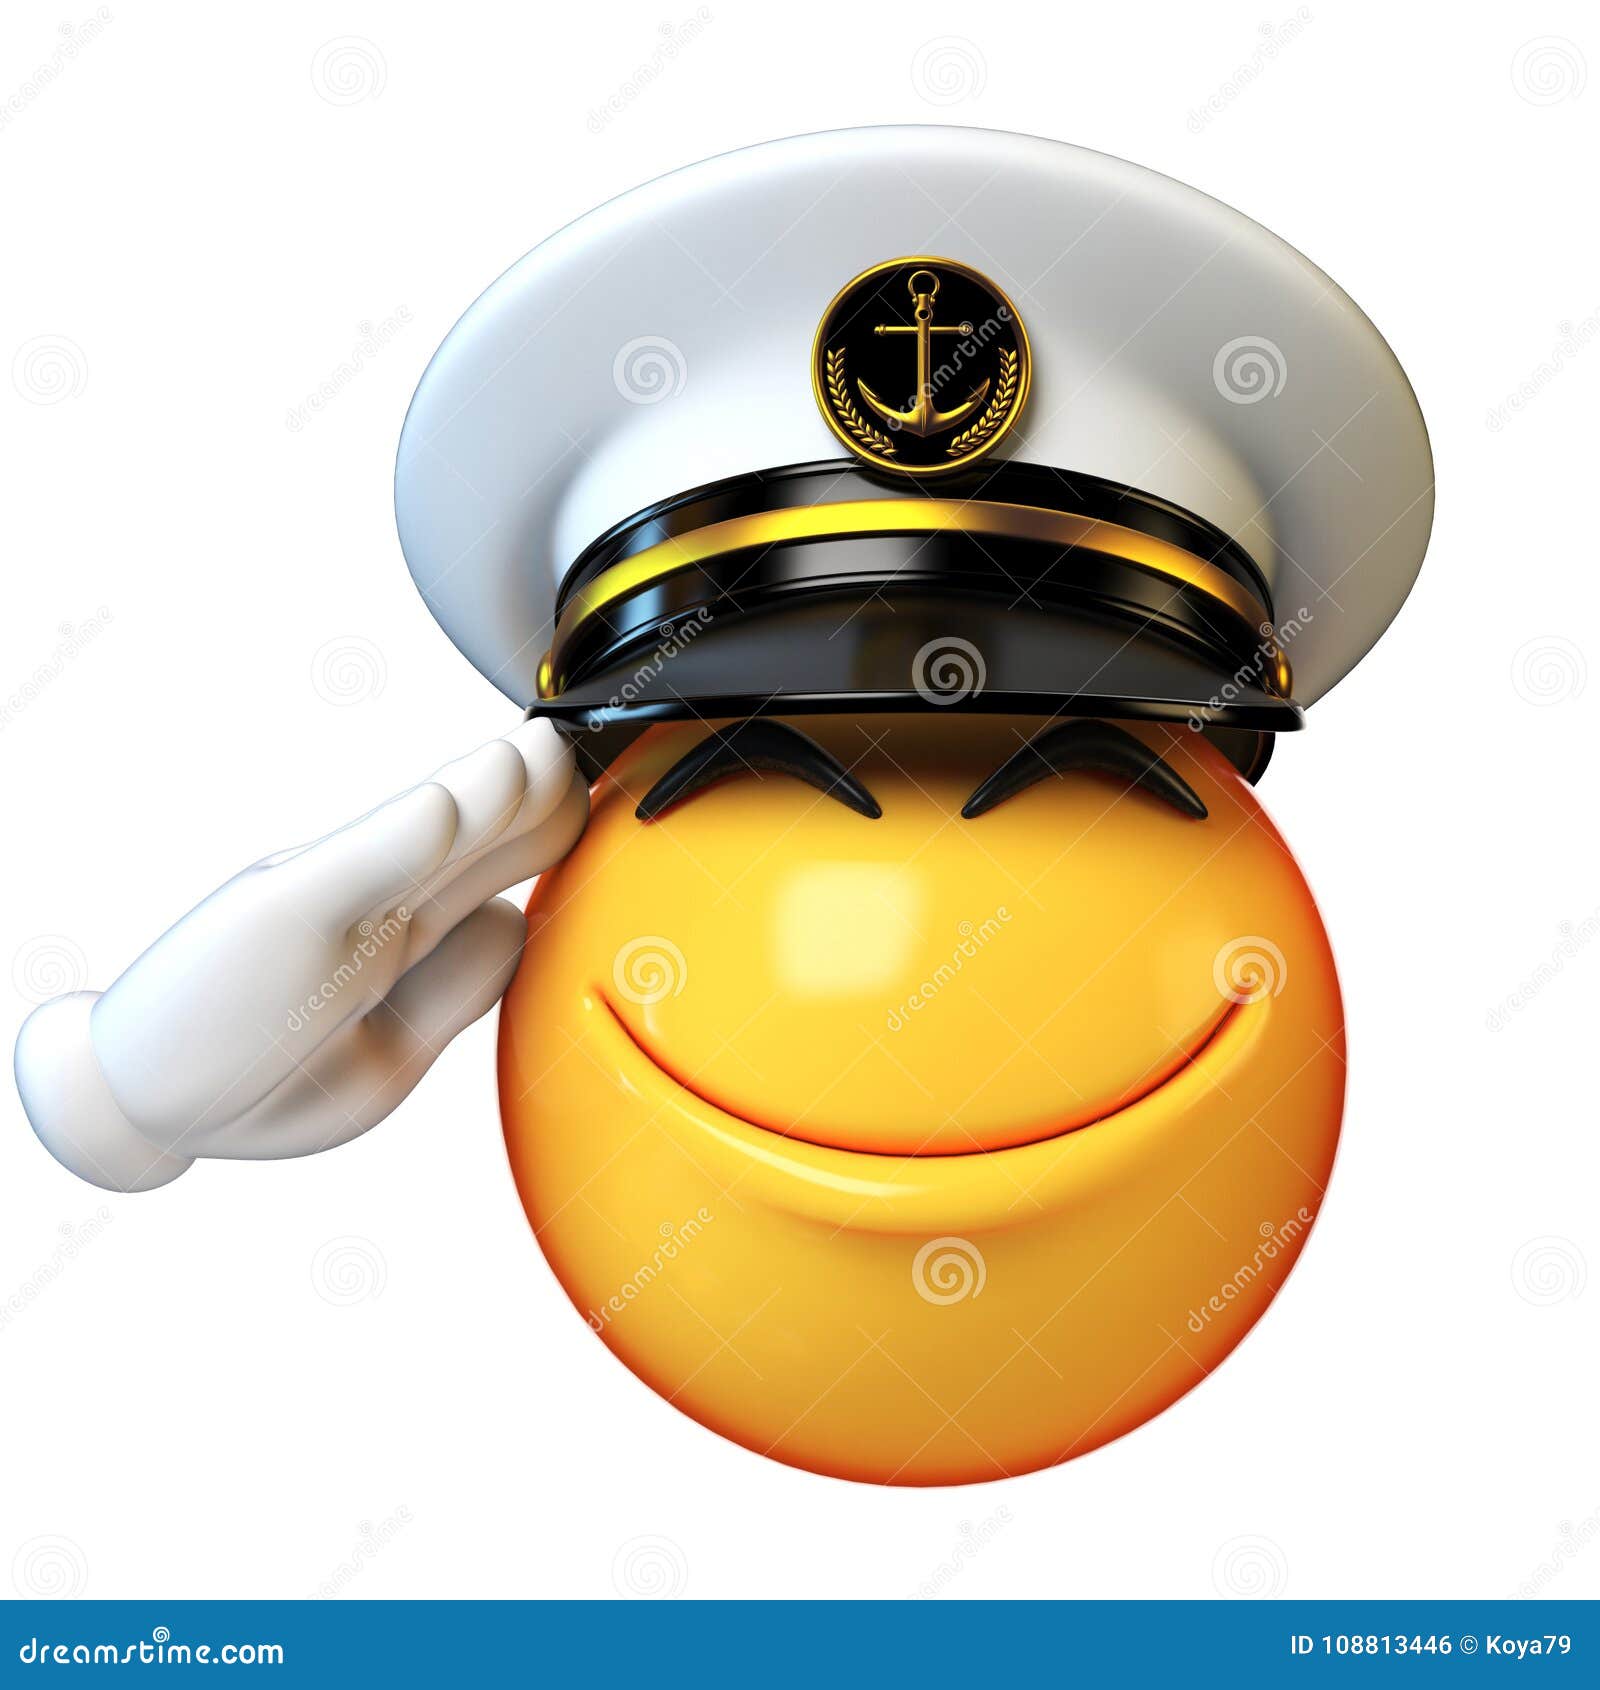 marines hat emoji  on white background, admiral emoticon wearing navy cap, saluting, 3d rendering